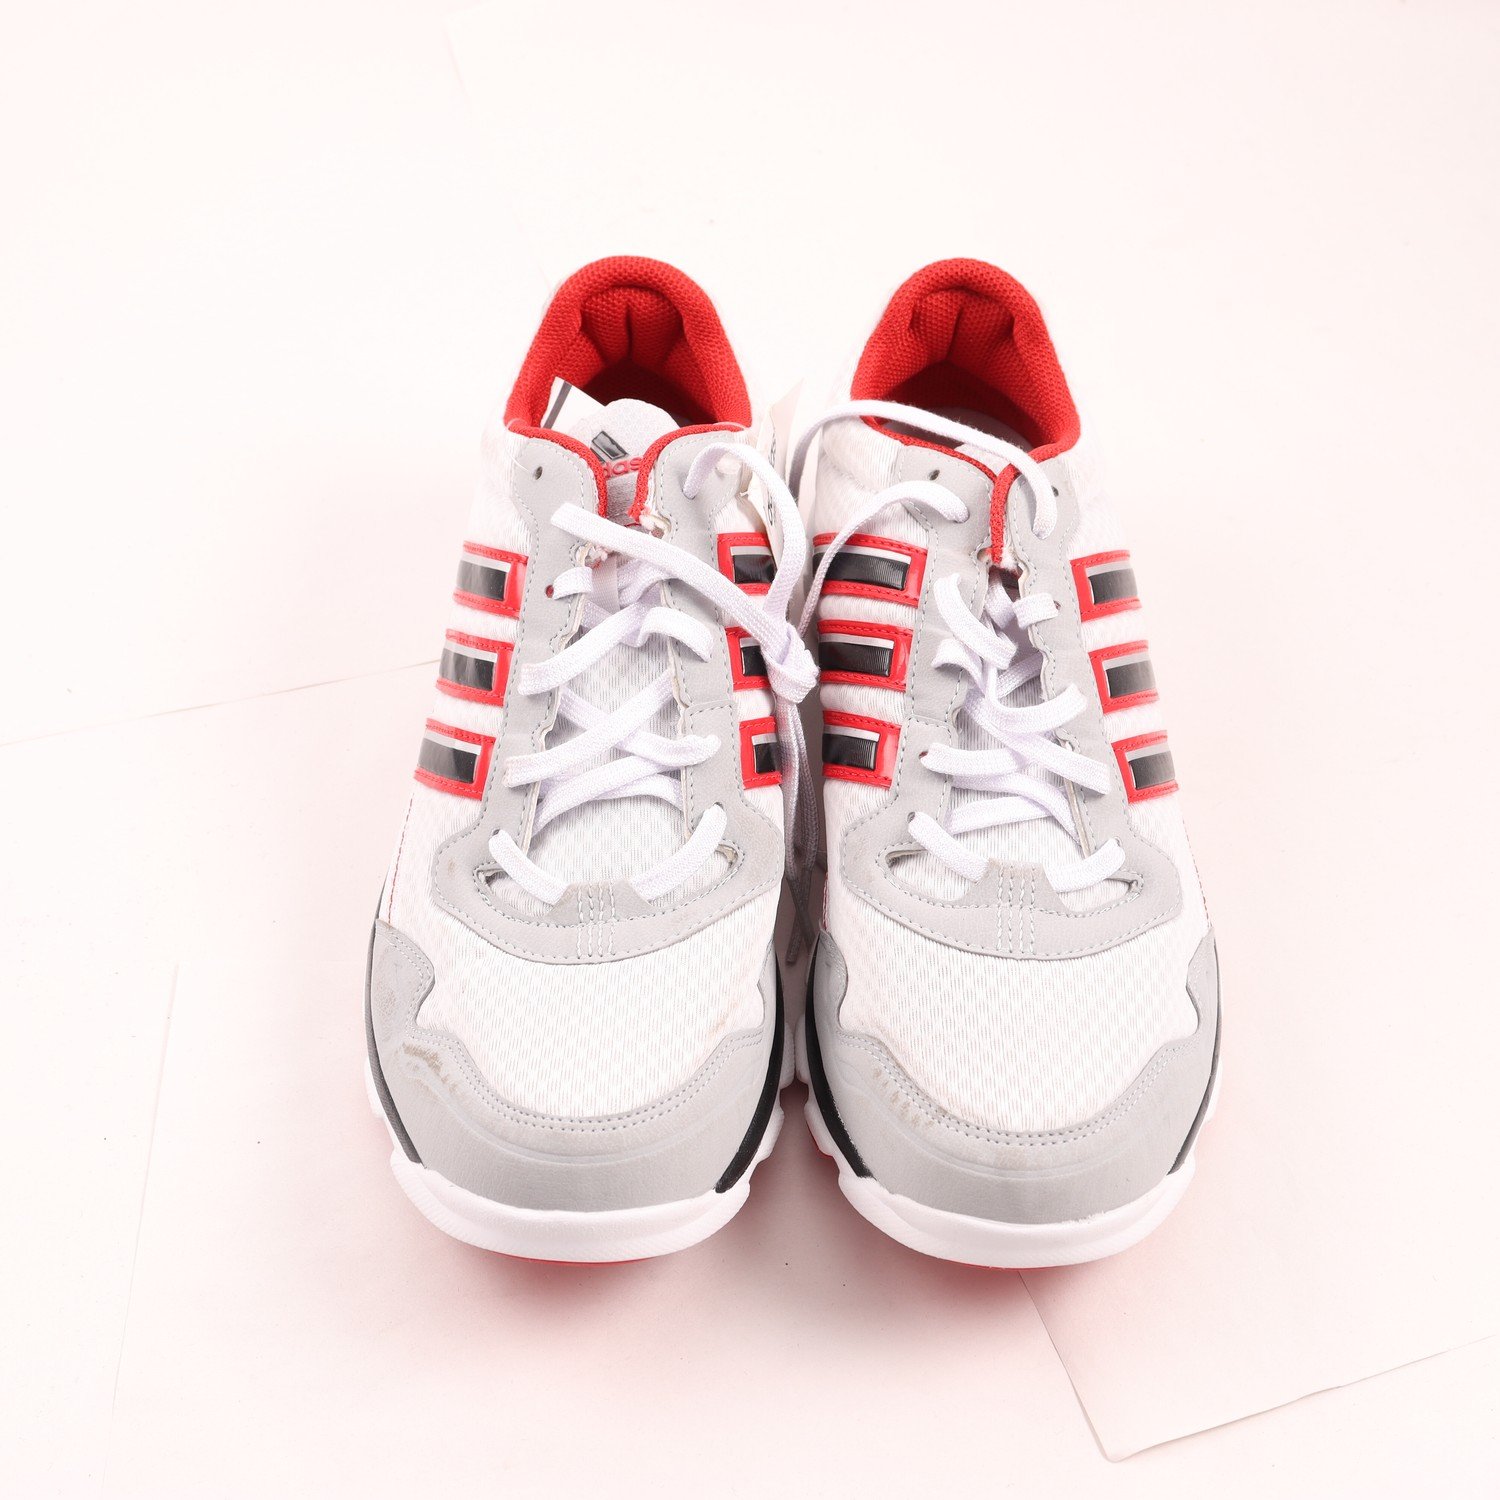 Sneakers, Adidas, vit/röd, stl. 10 1/2 (44)